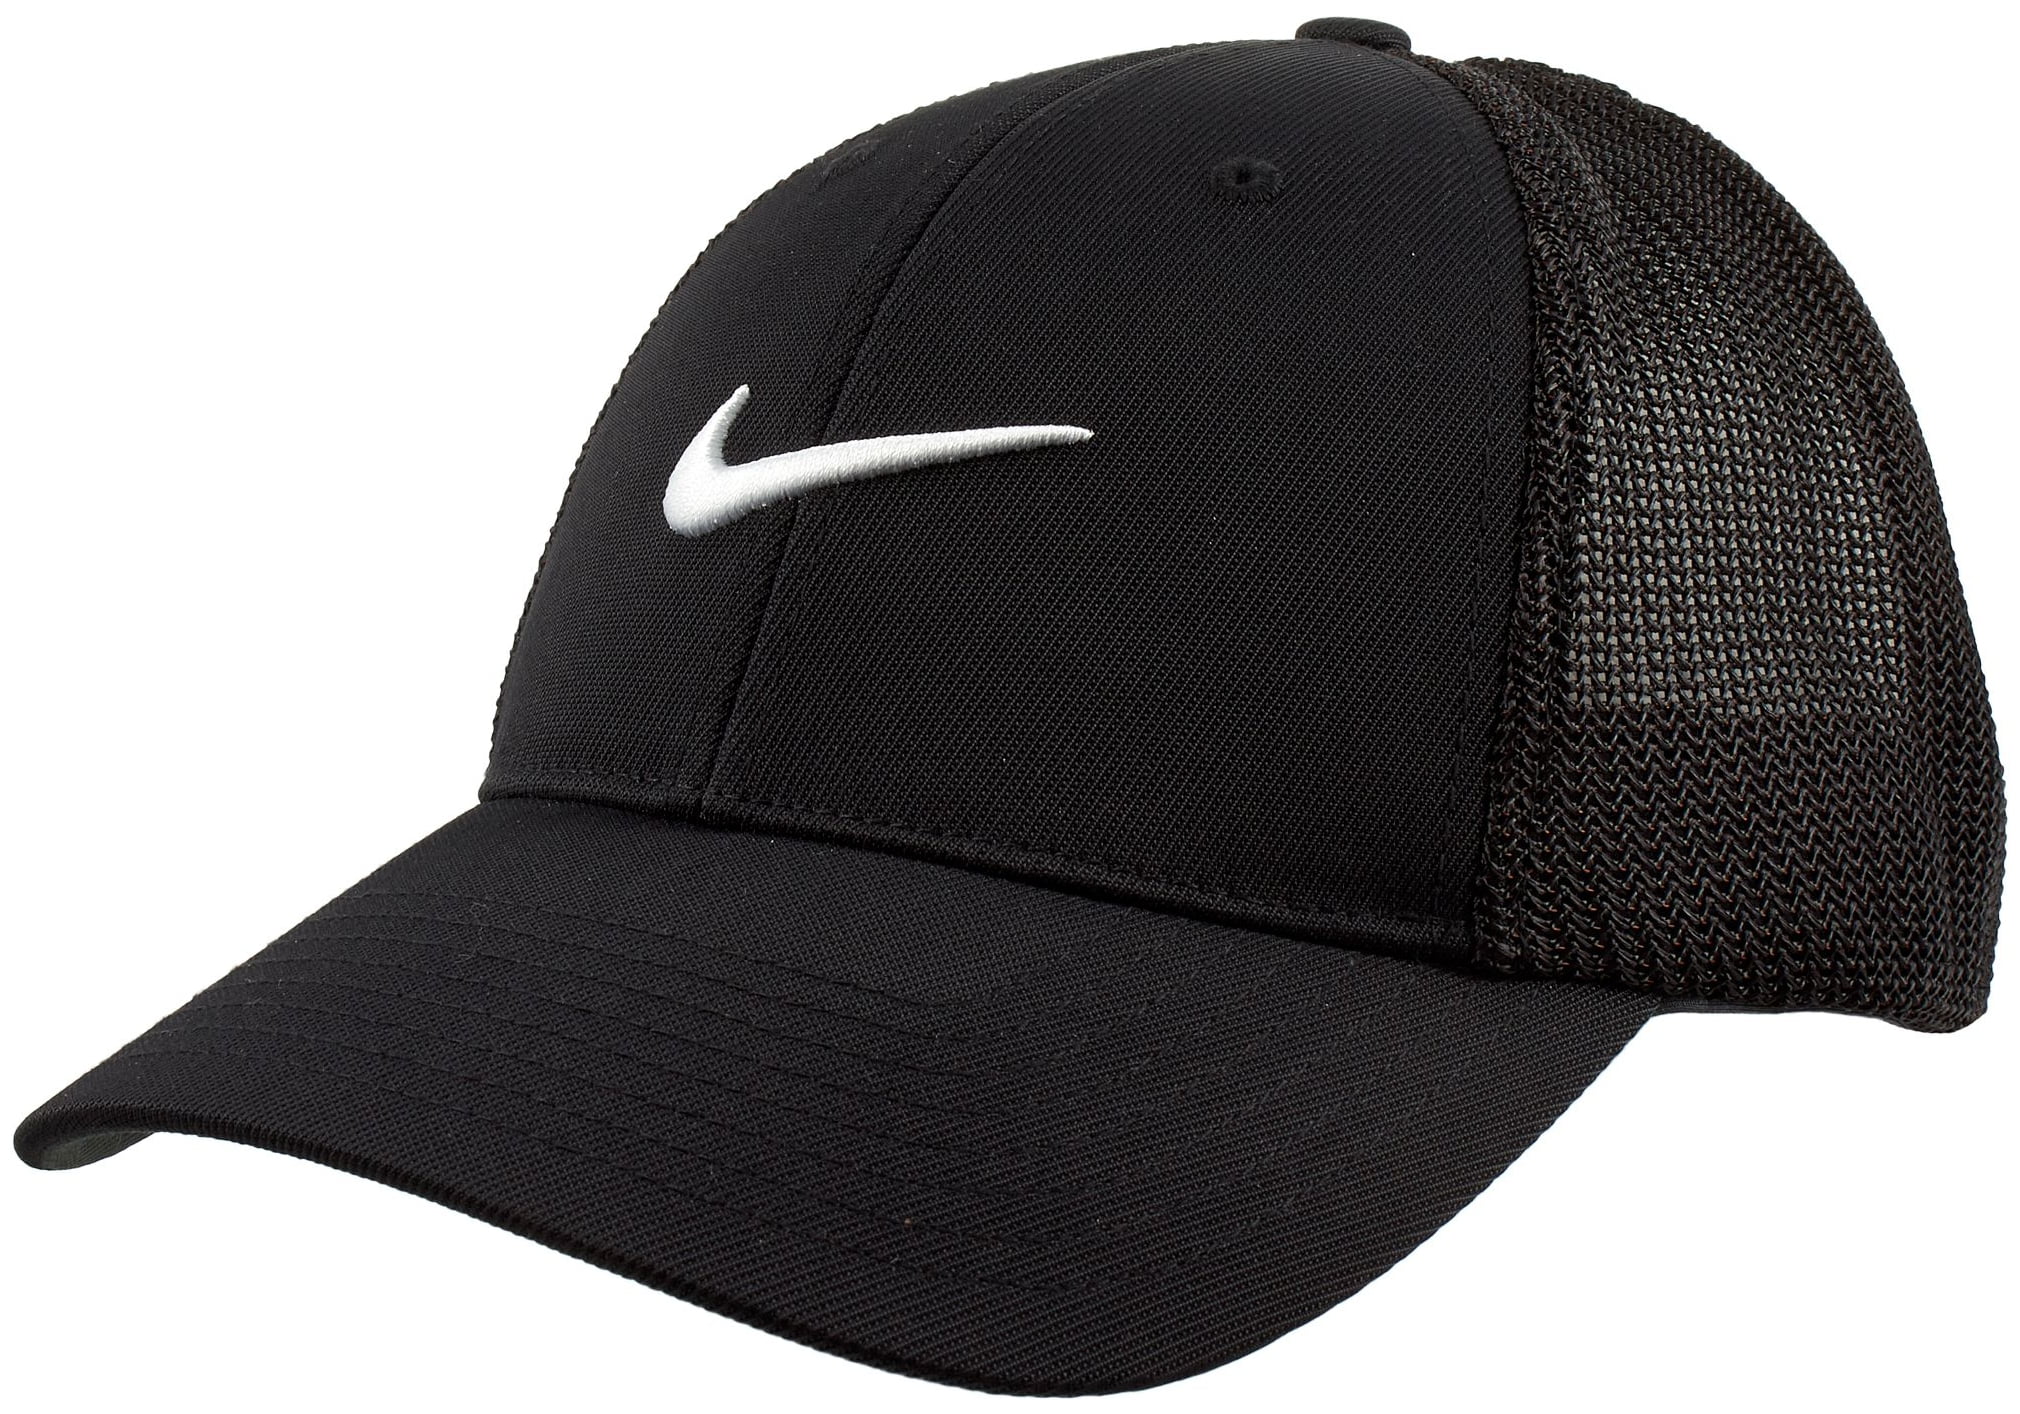 Nike Men's Flex Fit Golf Hat (Black, ML) - Walmart.com - Walmart.com